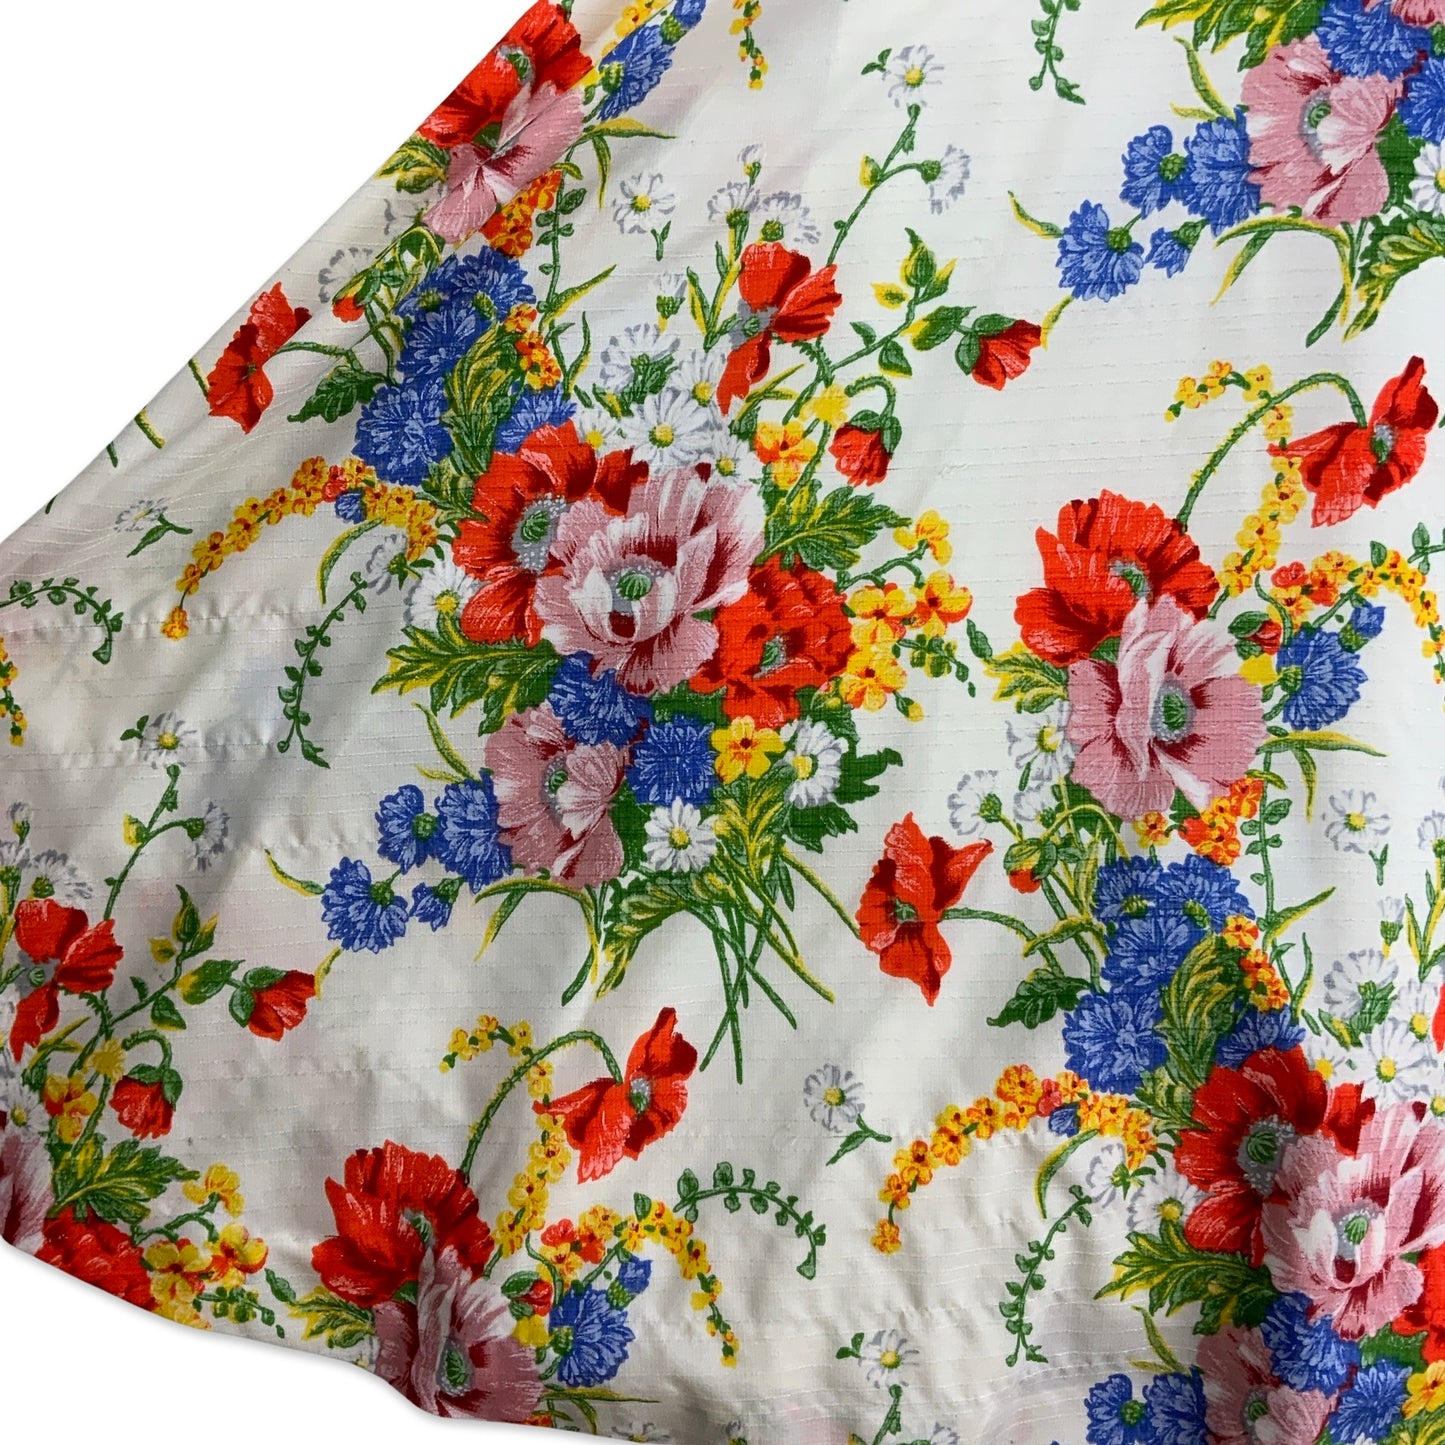 Vintage White & Multicolour Floral Print Midi Dress 8 10